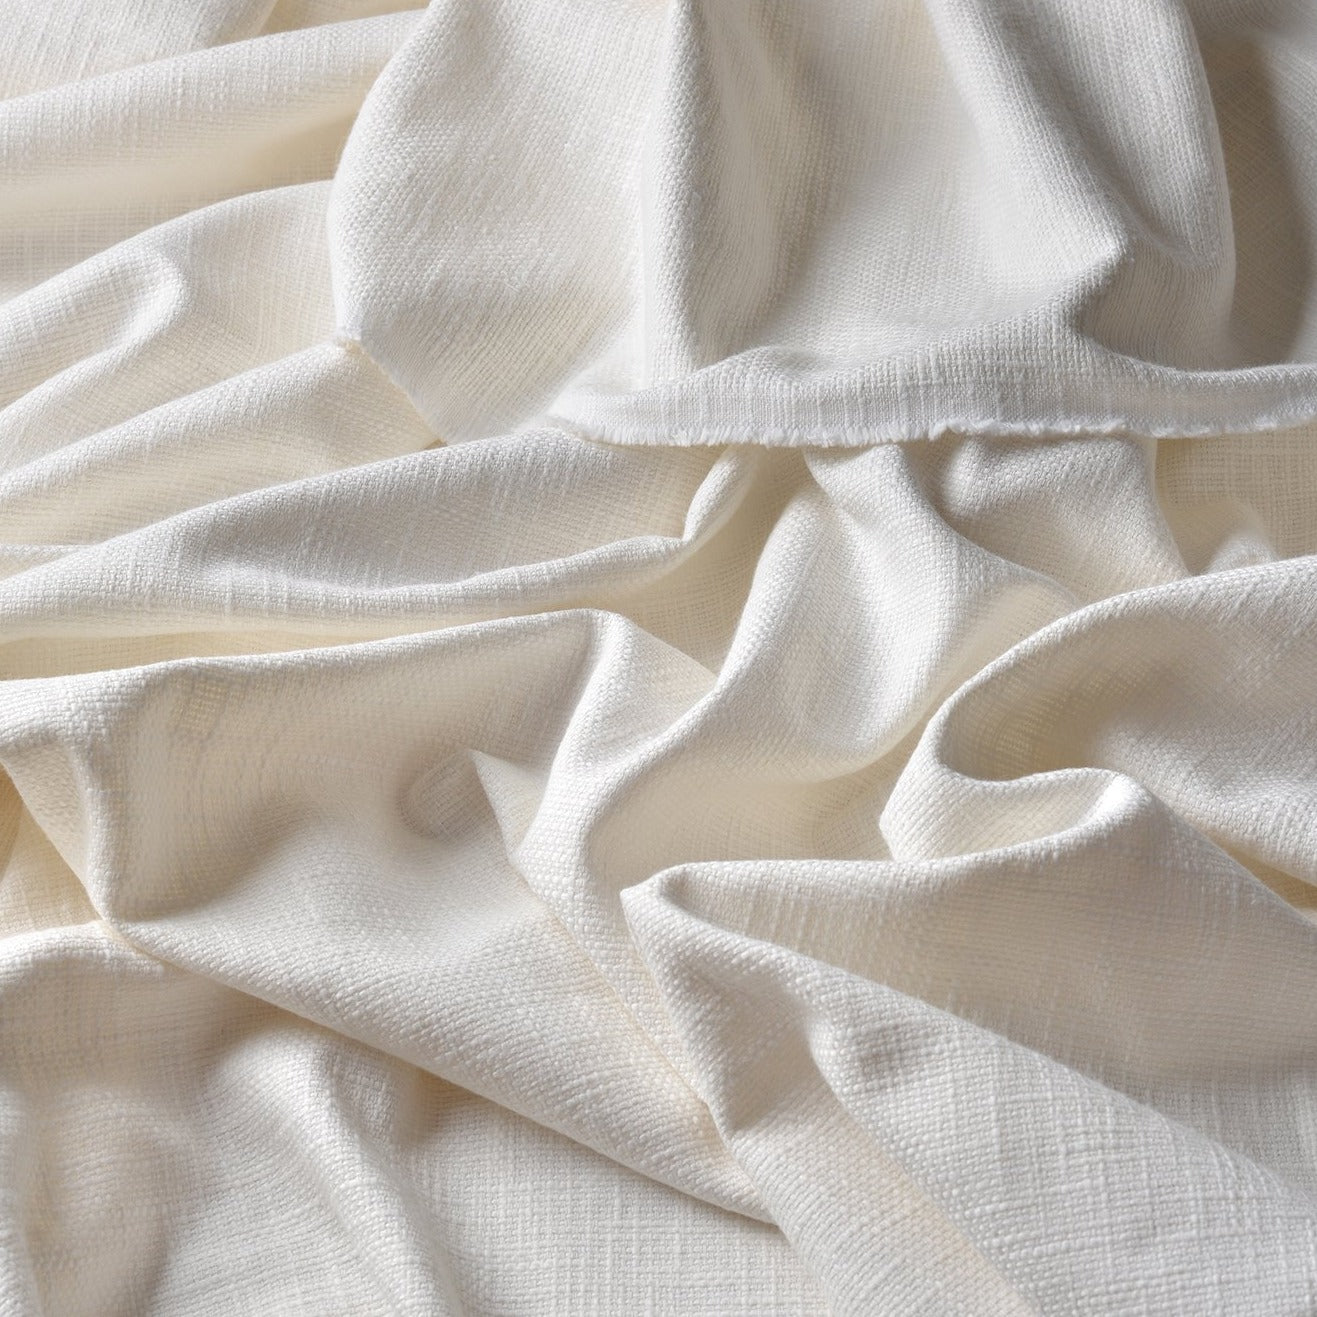 No.8 Hera Luxury Cotton Fabric